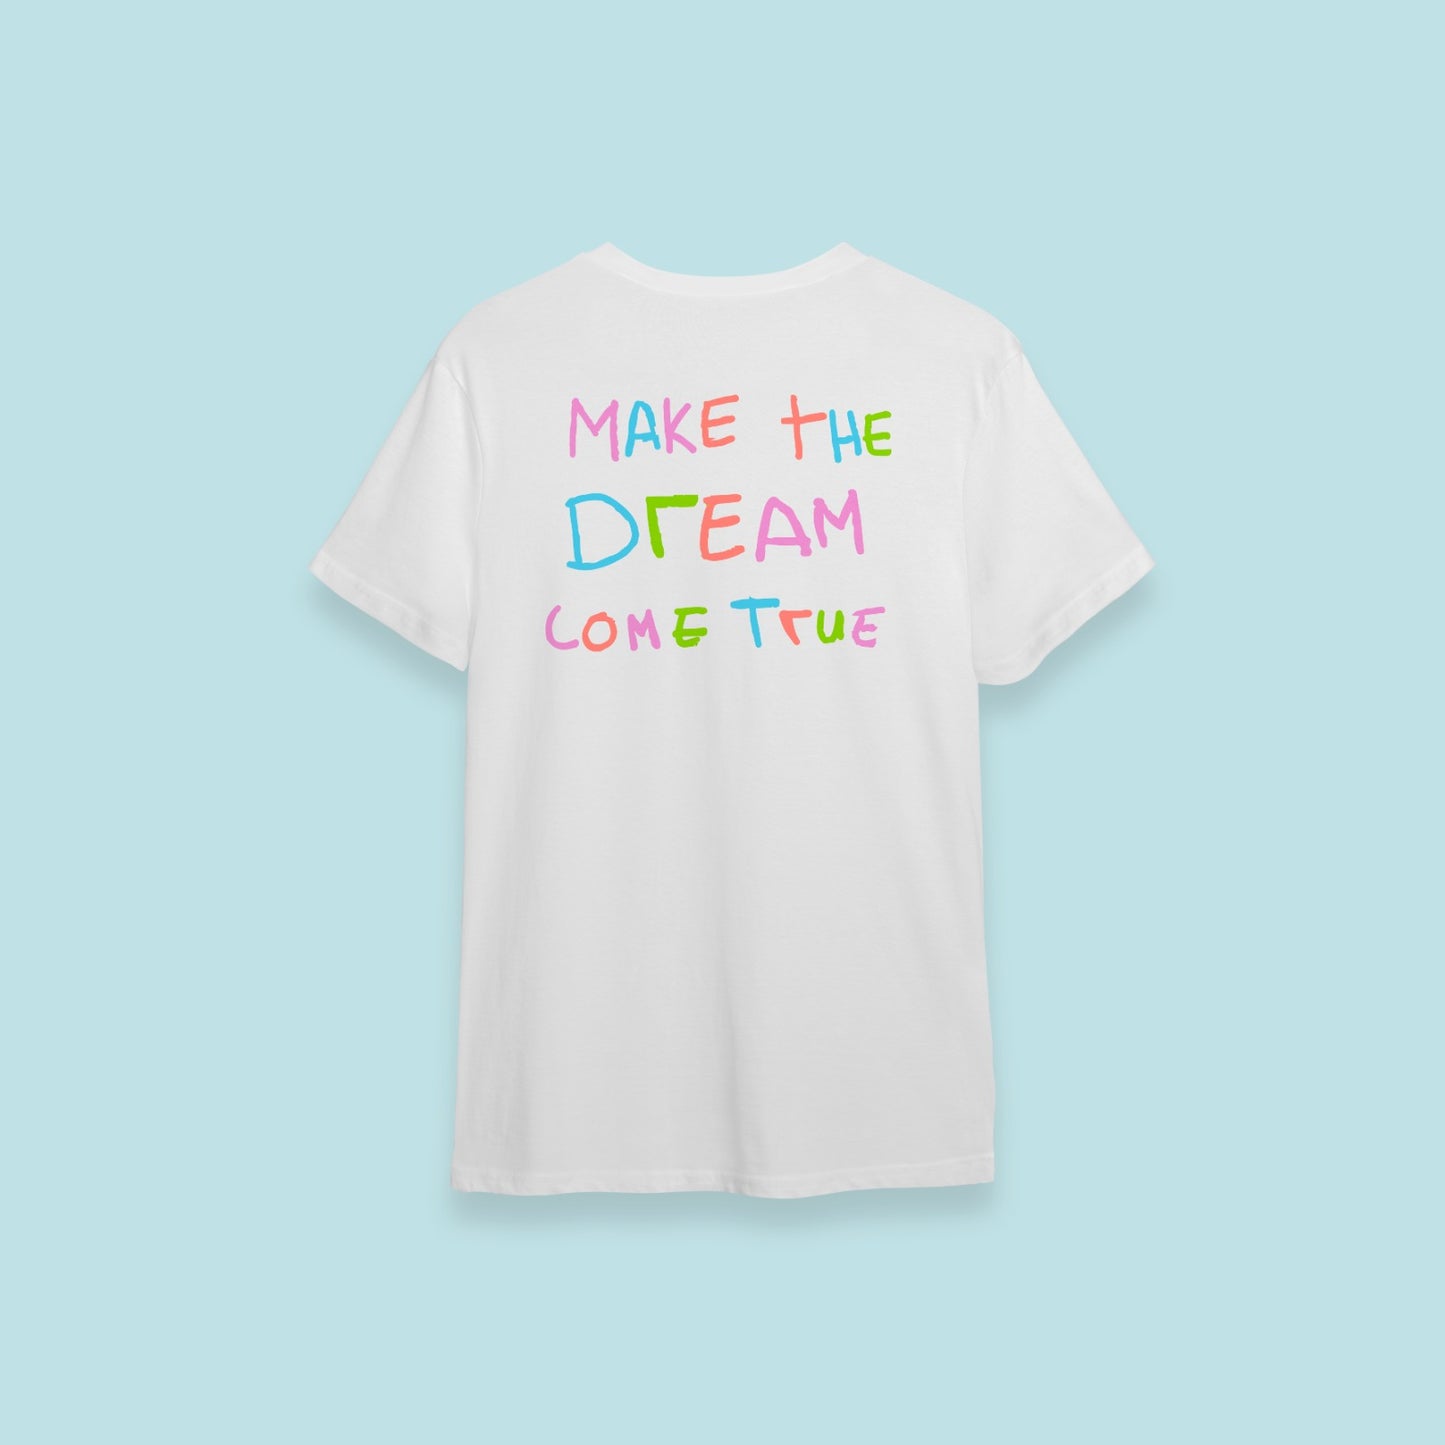 Camiseta Make the dream come true